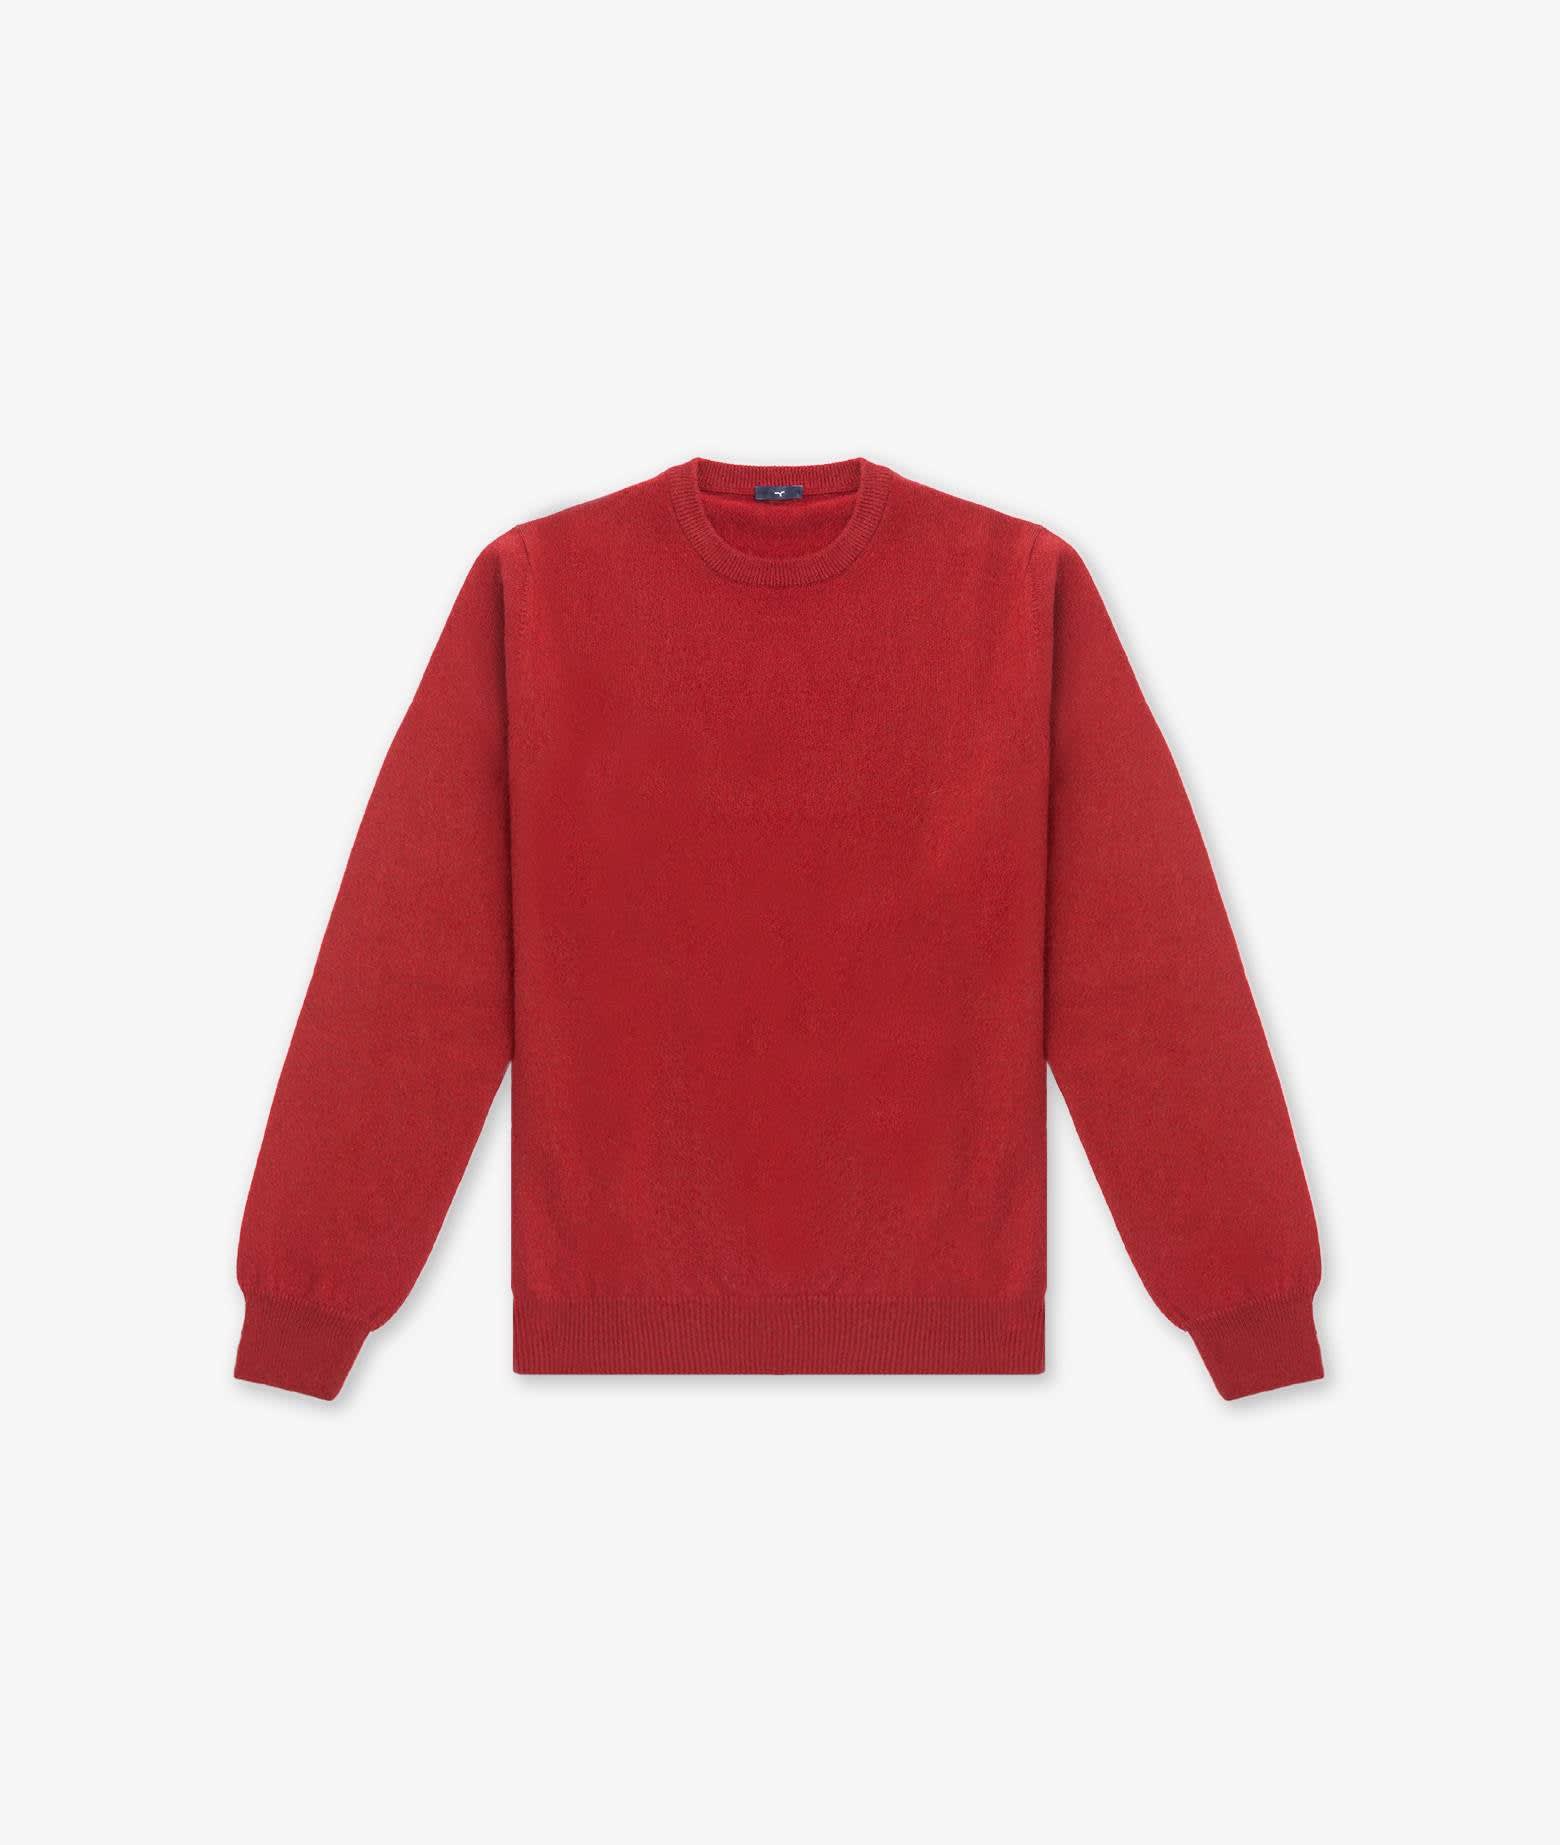 Larusmiani Crewneck Sweater Aspen Sweater In Red